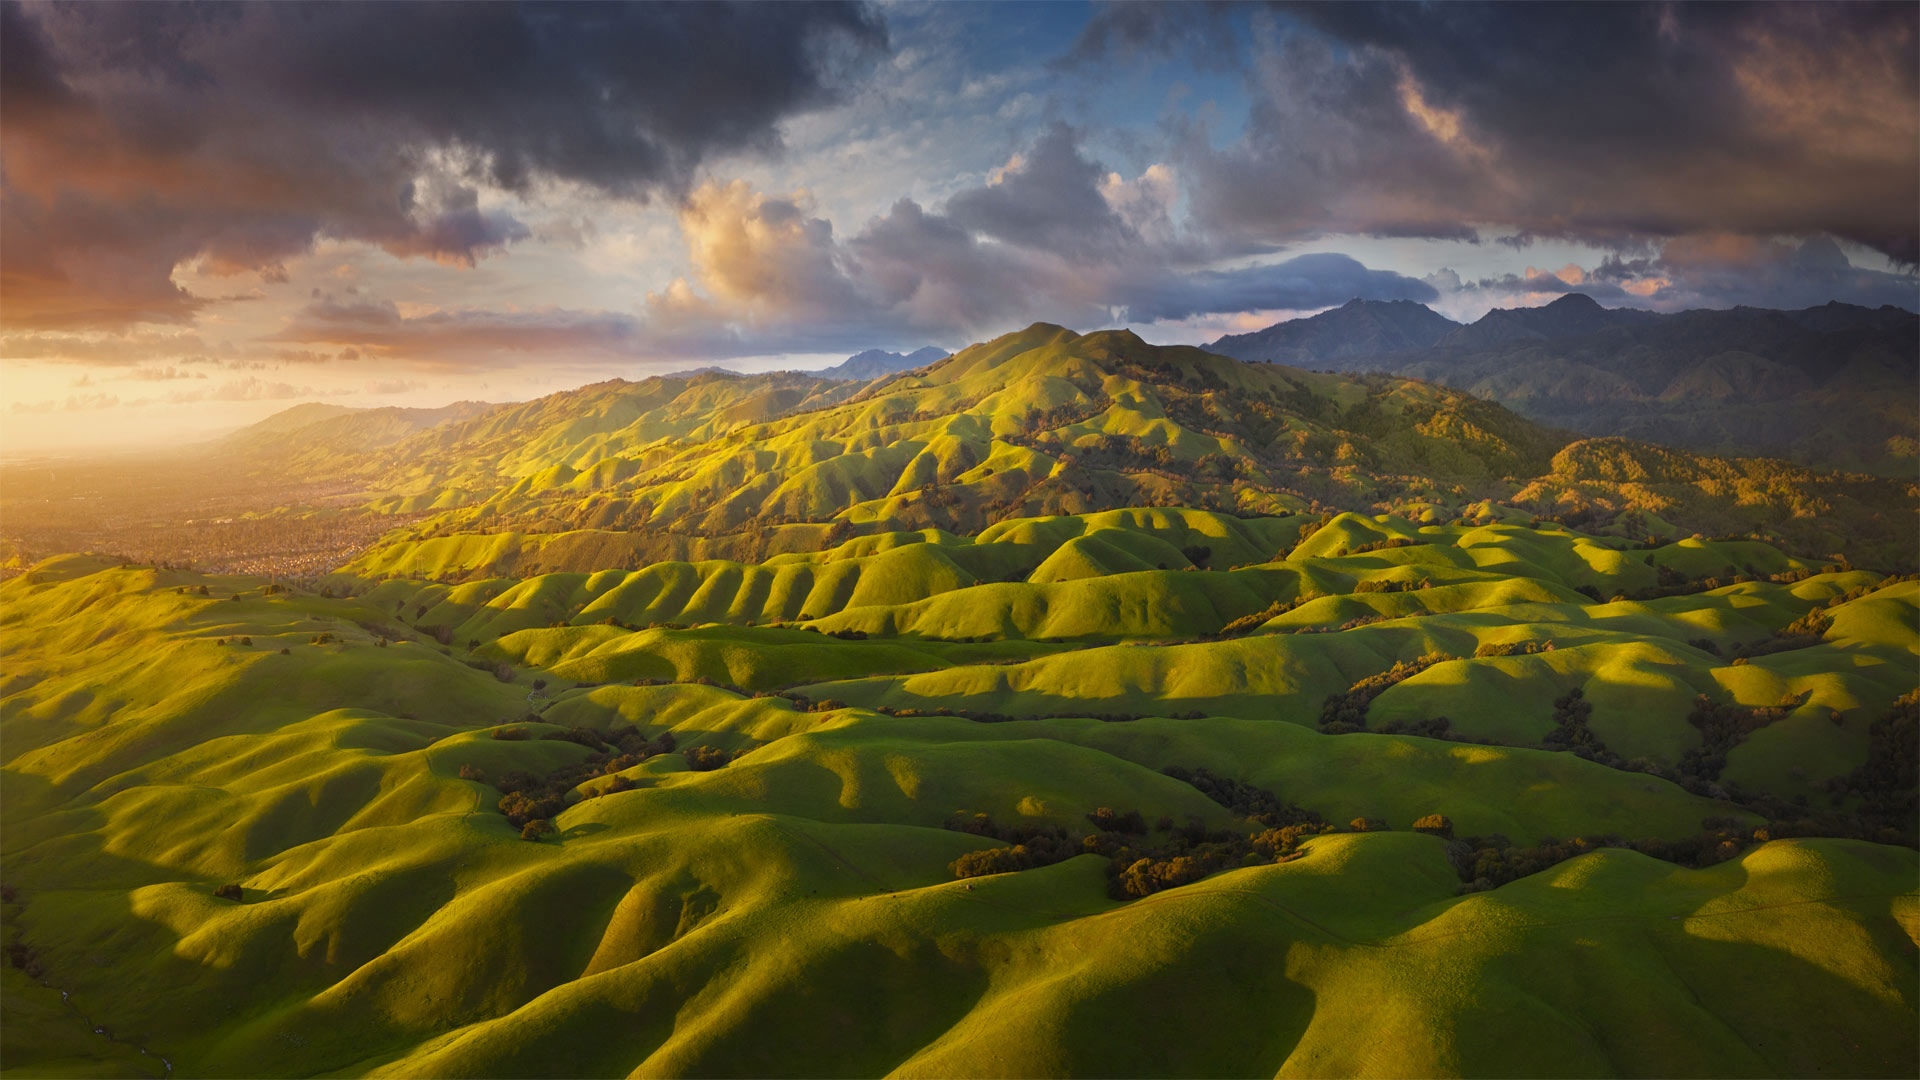 Foothills of the Diablo Range in the East Bay region of Northern California - Jeff Lewis/Tandem Stills + Motion)